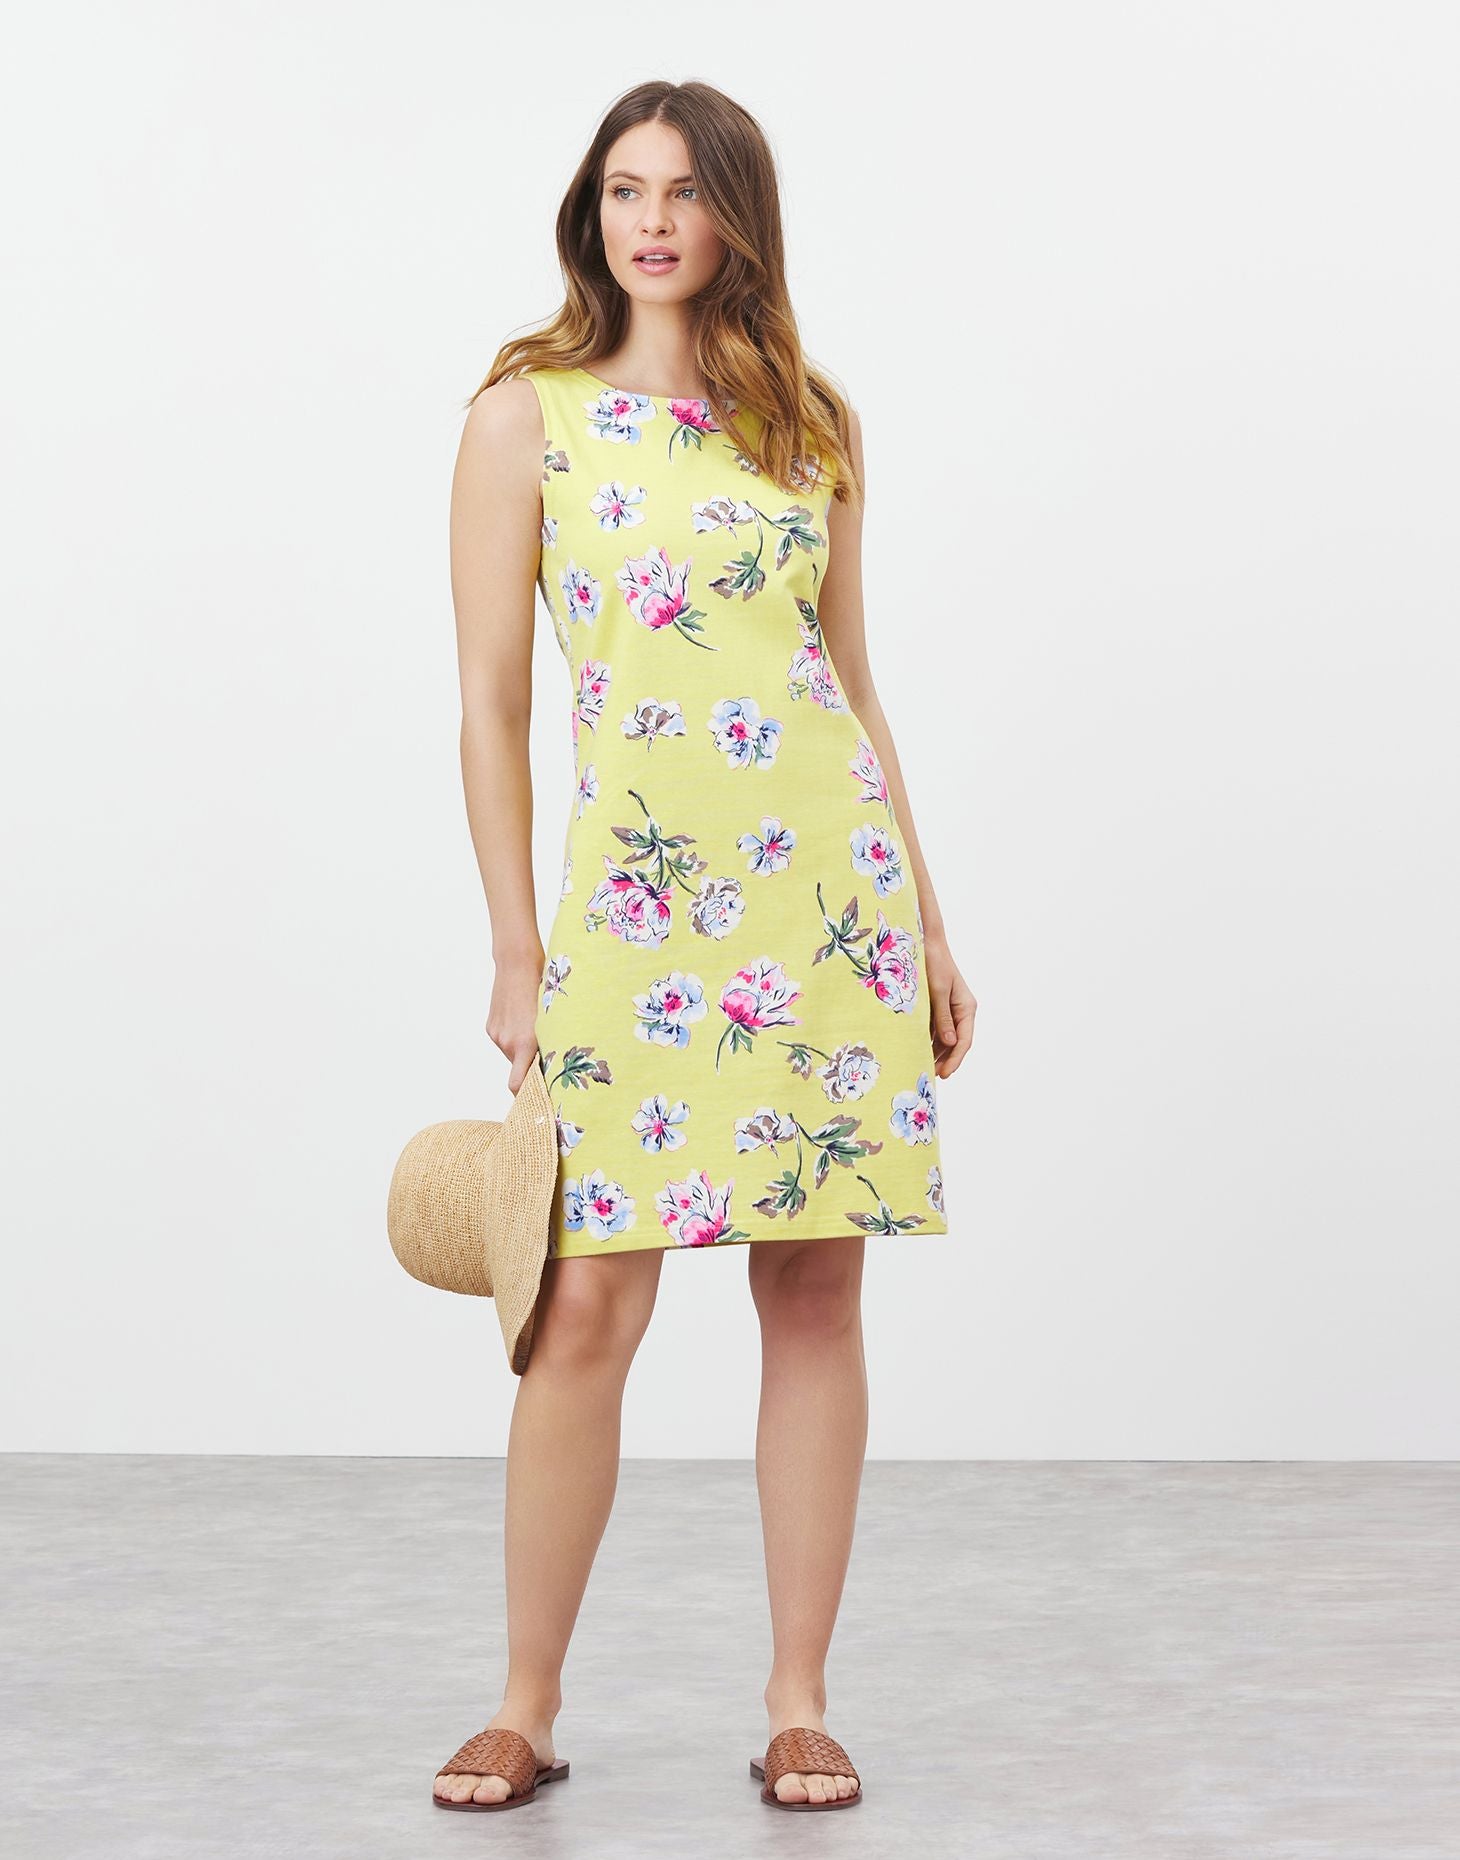 Riva Sleeveless Jersey Dress in Lemon Floral